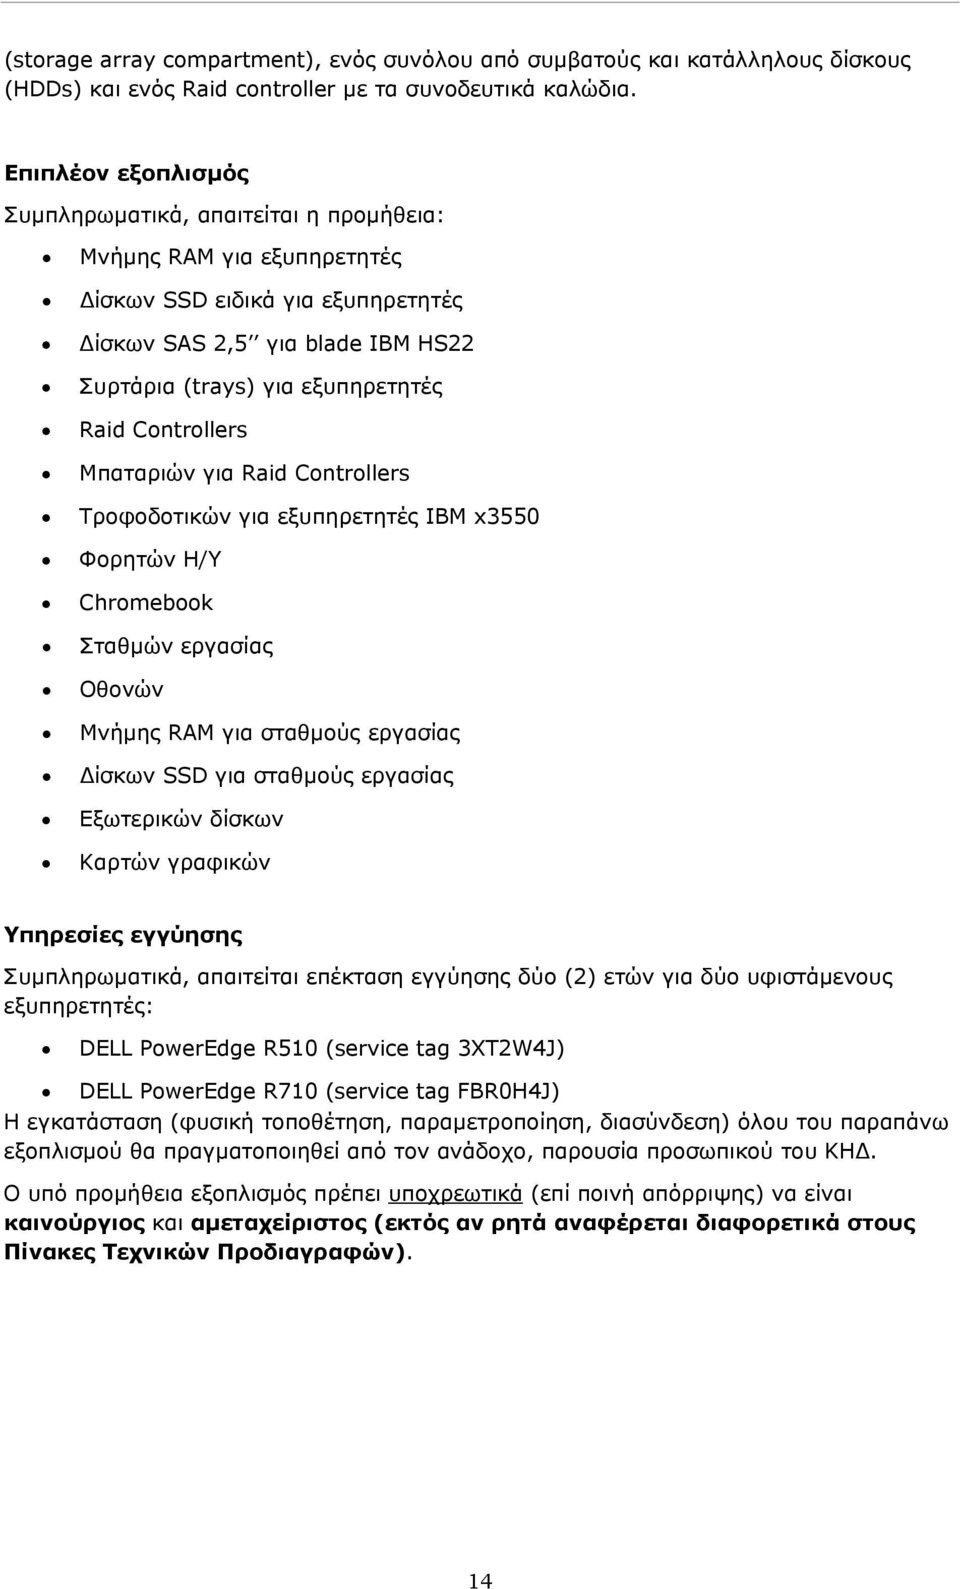 Controllers Μπαταριών για Raid Controllers Τροφοδοτικών για εξυπηρετητές IBM x3550 Φορητών Η/Υ Chromebook Σταθμών εργασίας Οθονών Μνήμης RAM για σταθμούς εργασίας ίσκων SSD για σταθμούς εργασίας